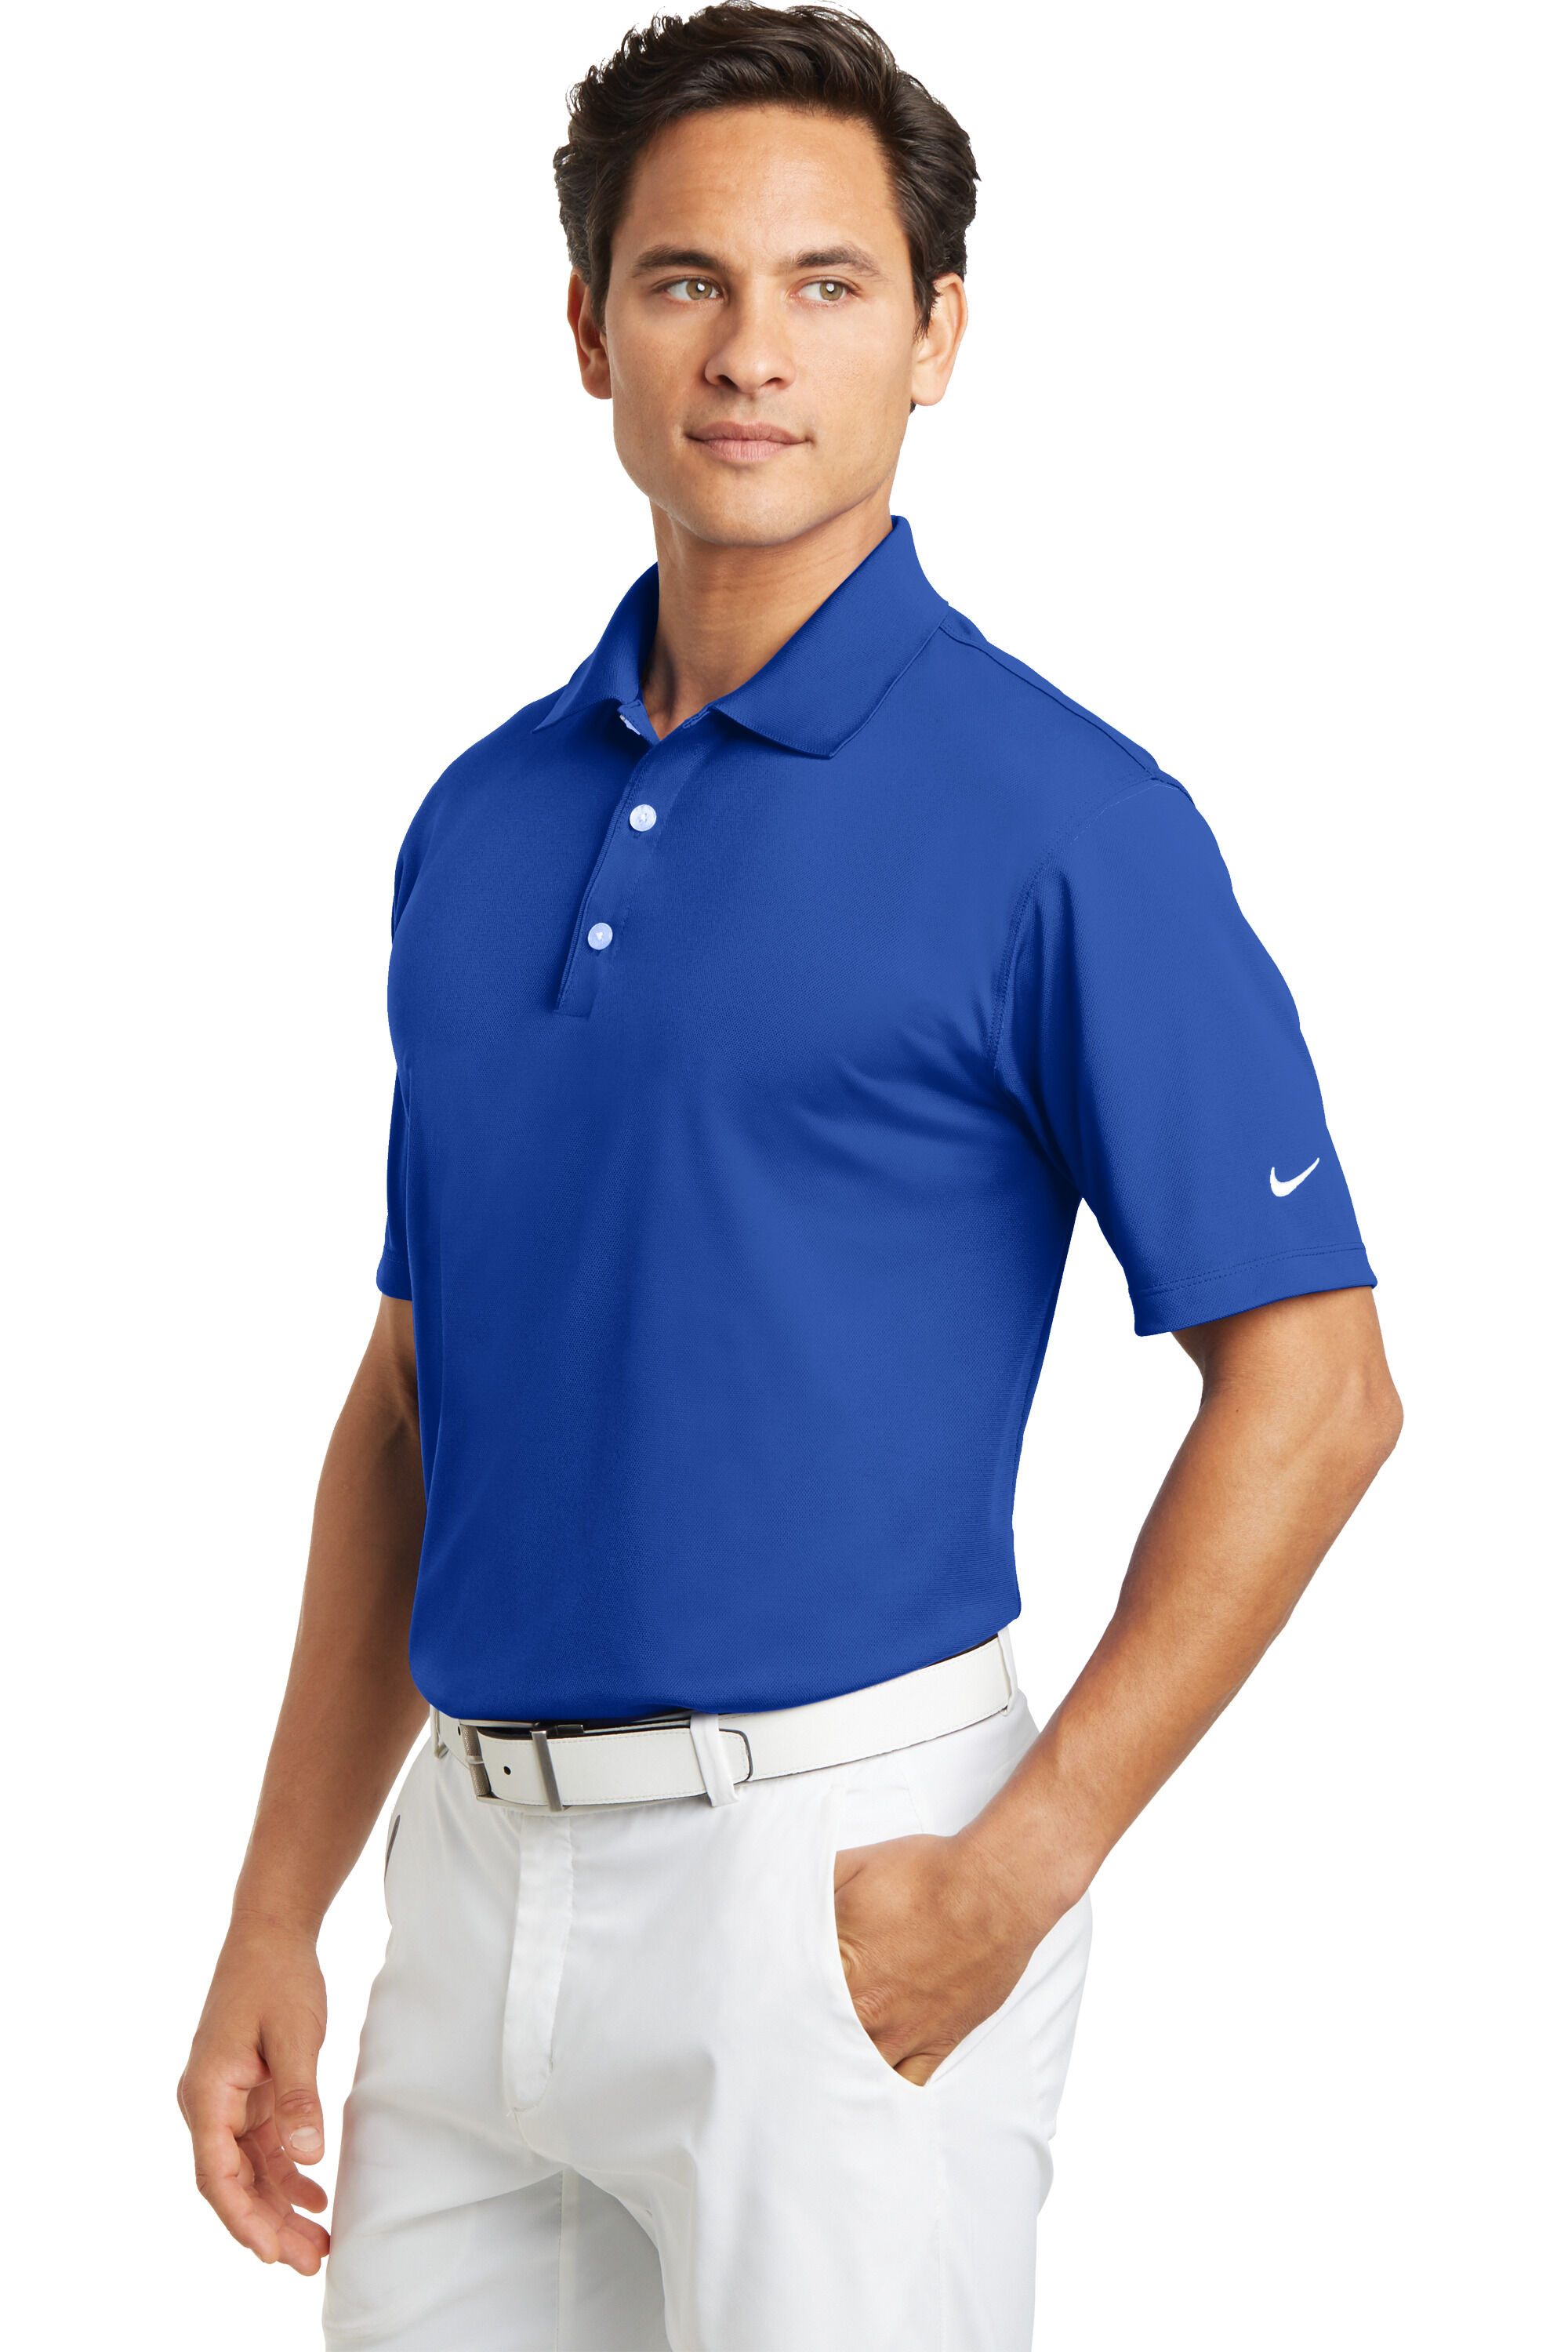 Apparel - Clothing, Headwear & Accessories - Polos - Golf Shirts ...